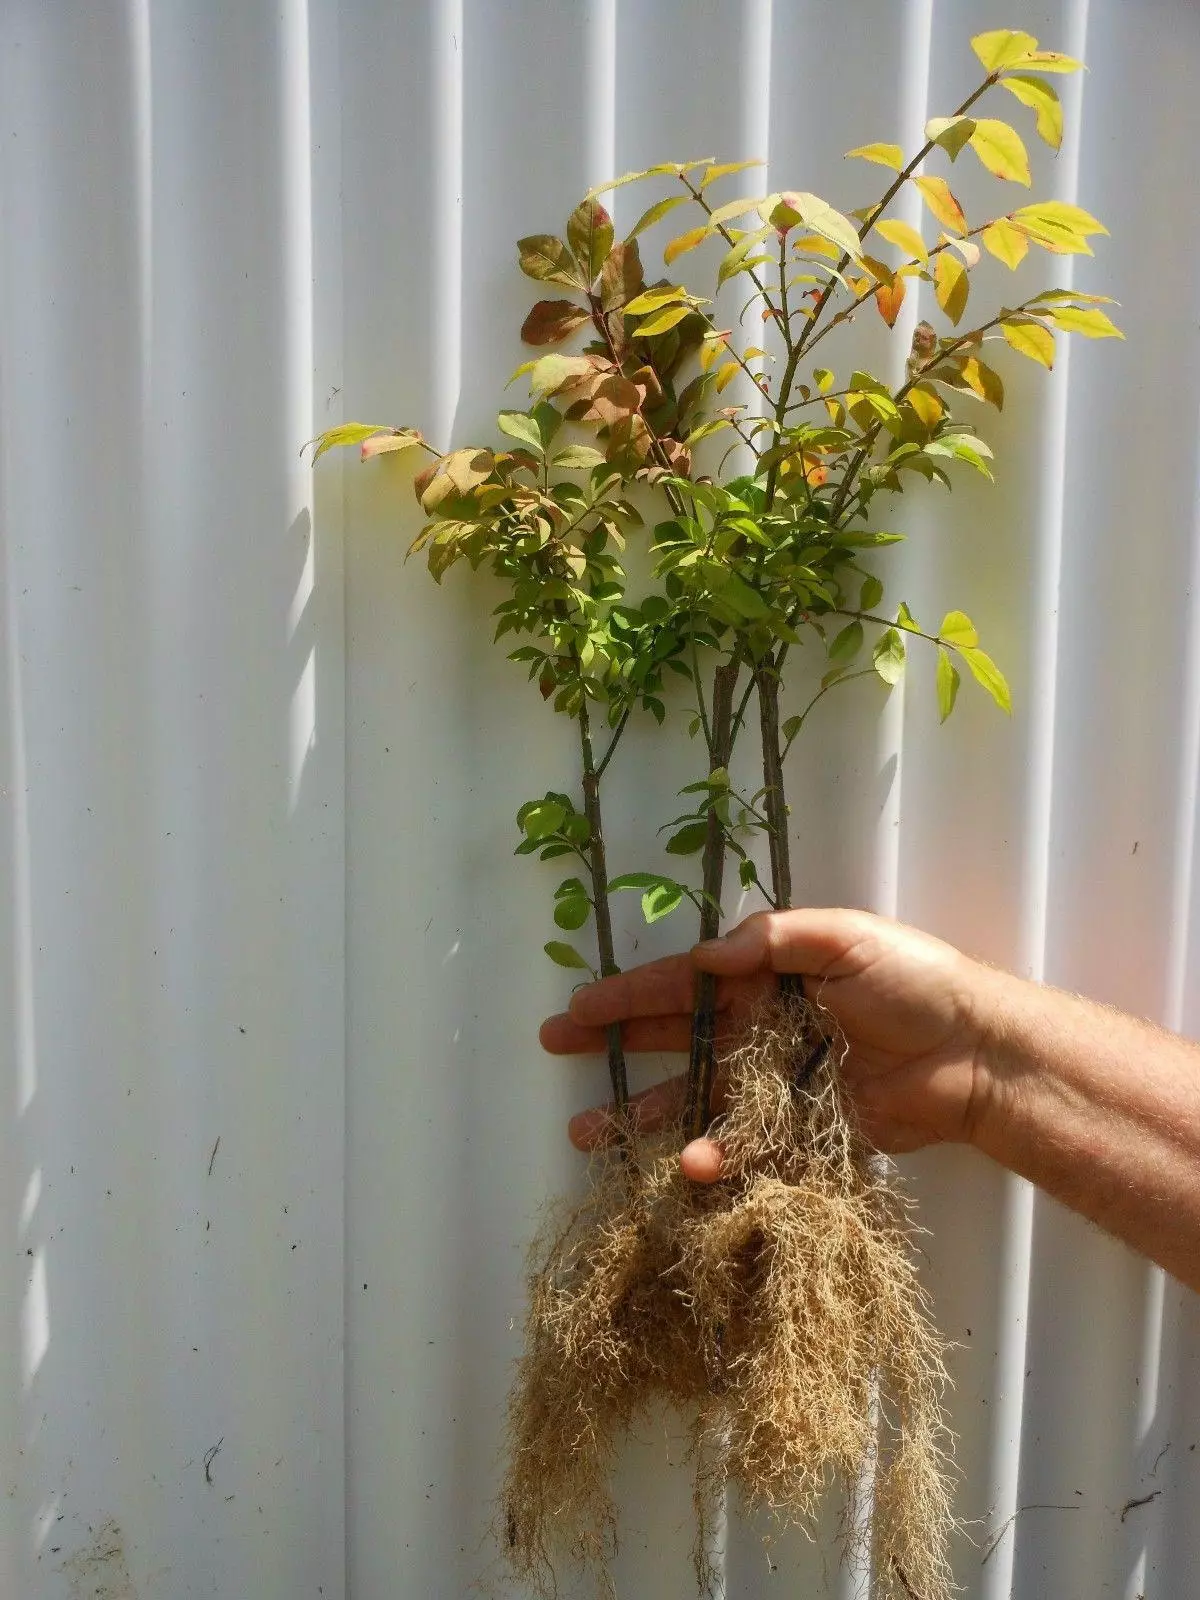 6-12&quot; Tall Dwarf Burning Bush/Shrub Live Plant Bare Root Euonymus alatus - $69.90